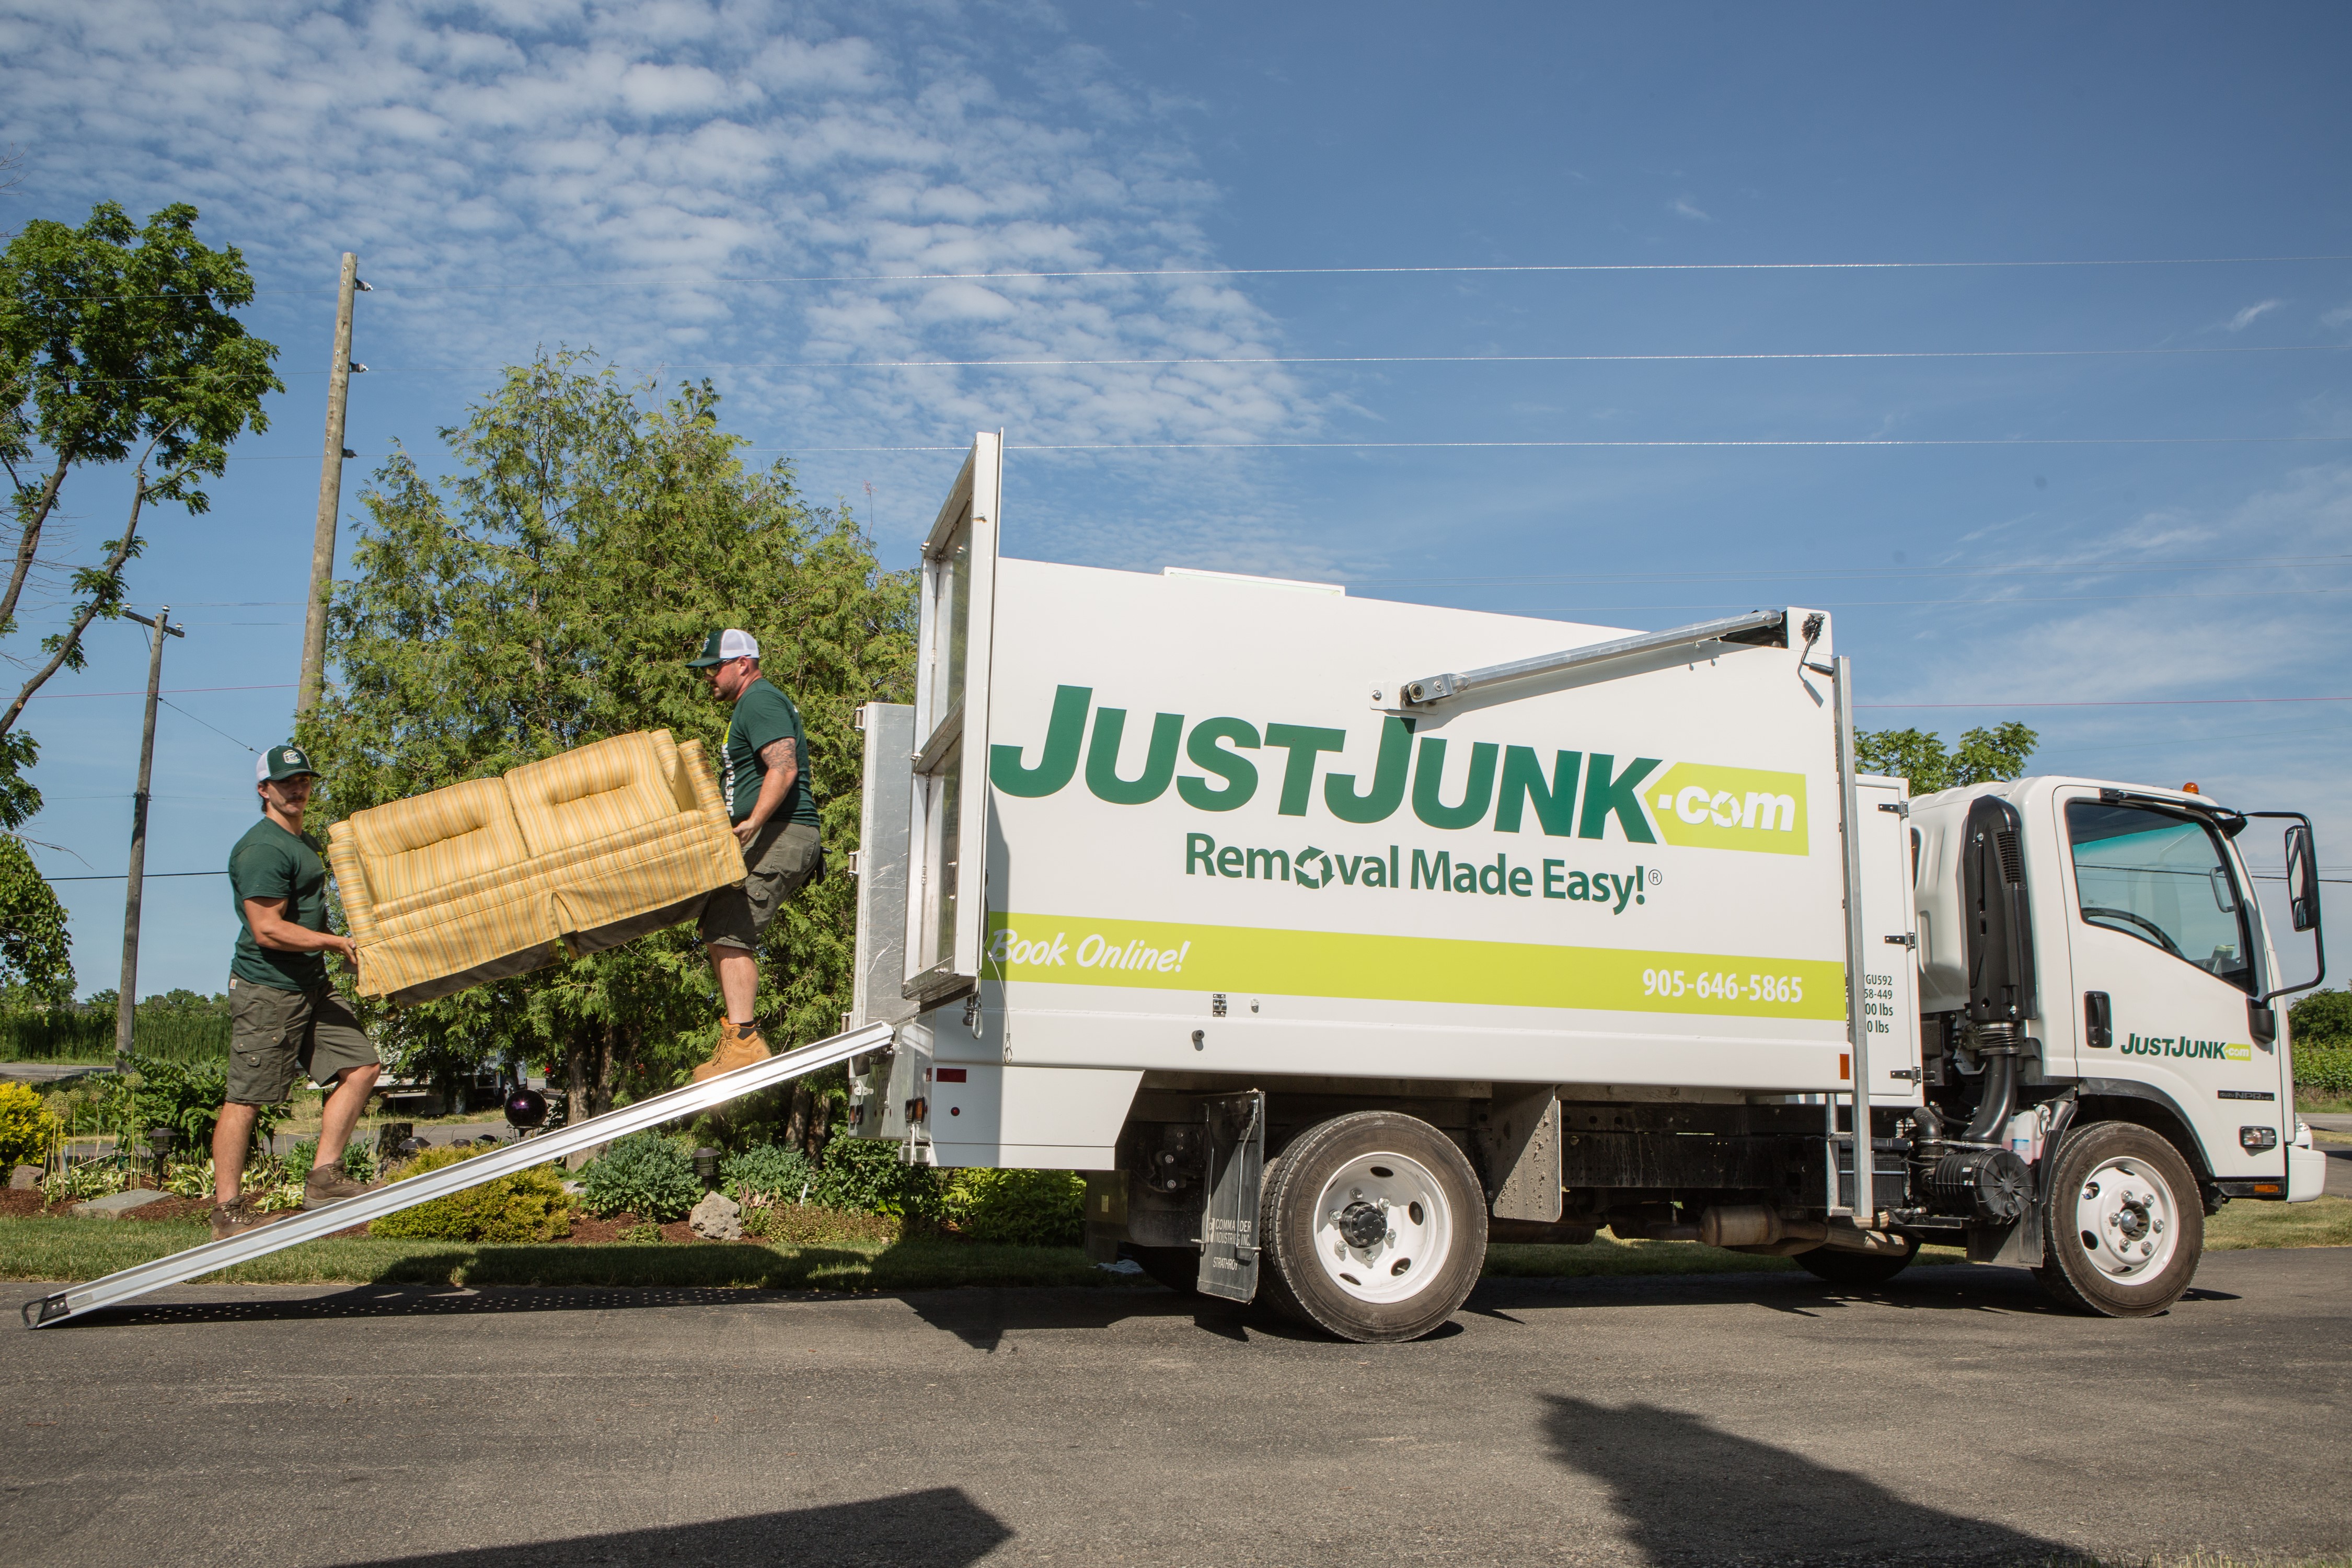 JUSTJUNK - Junk Removal Calgary